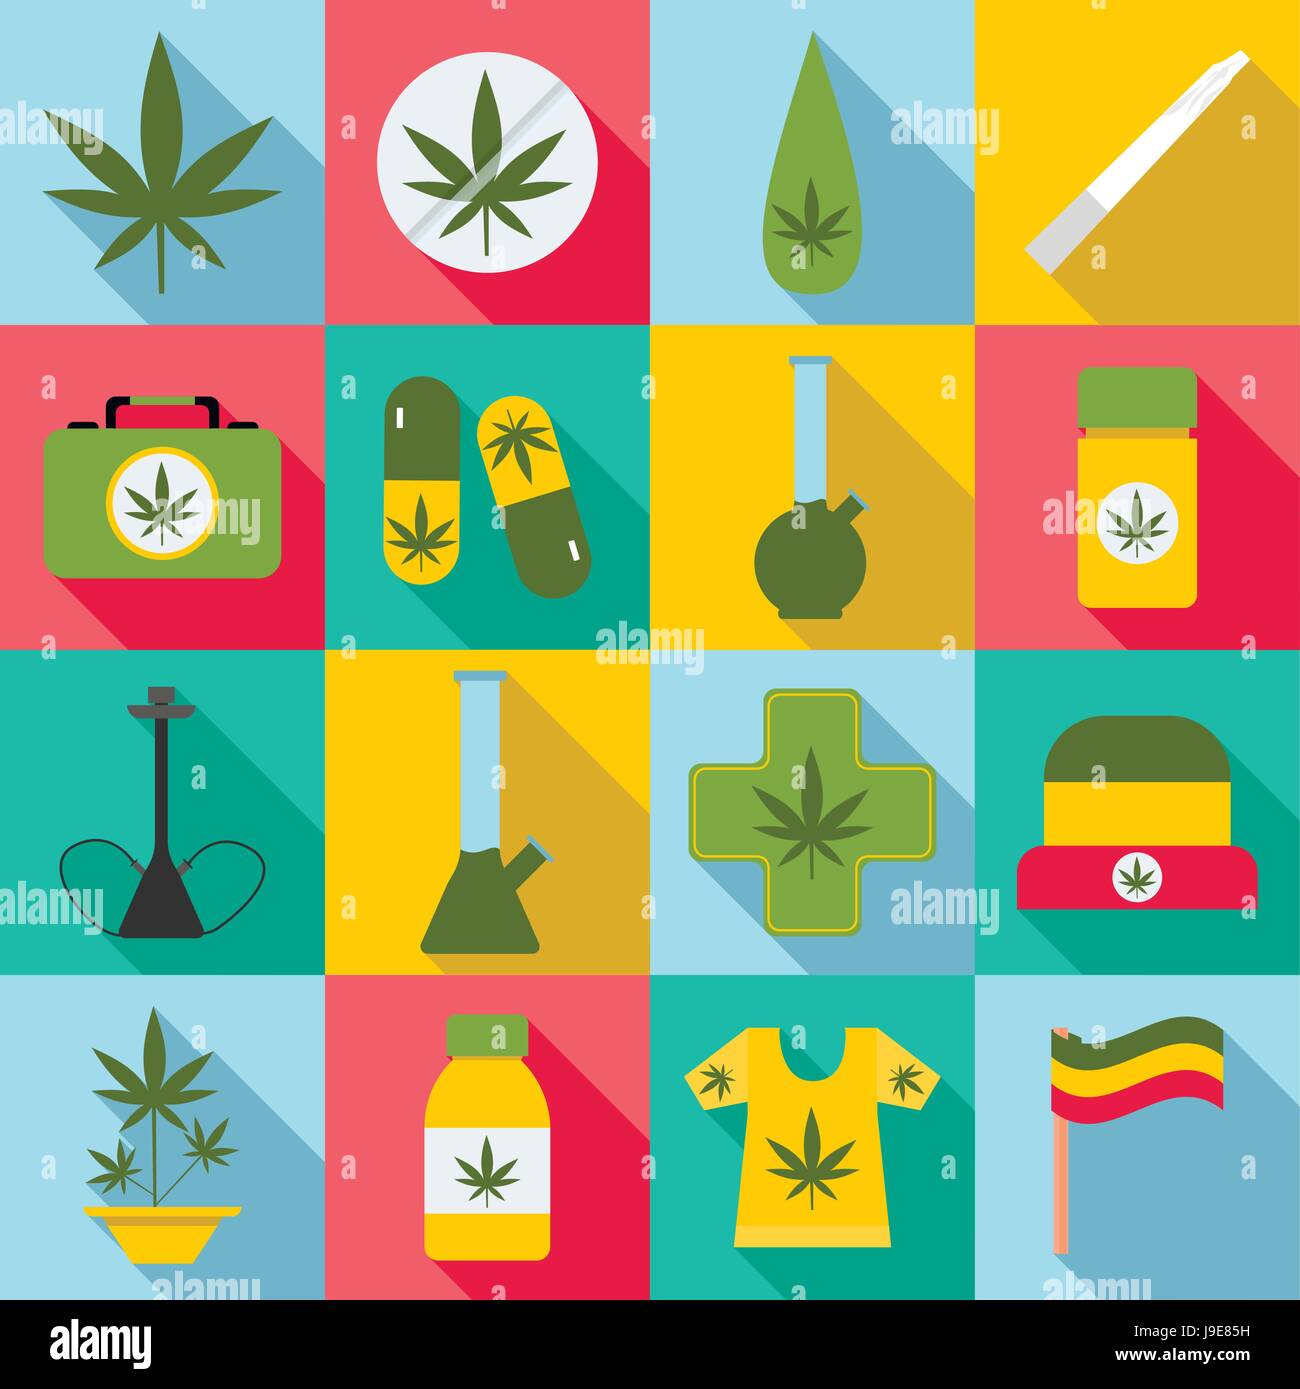 Marijuana icons set, flat style Stock Vector